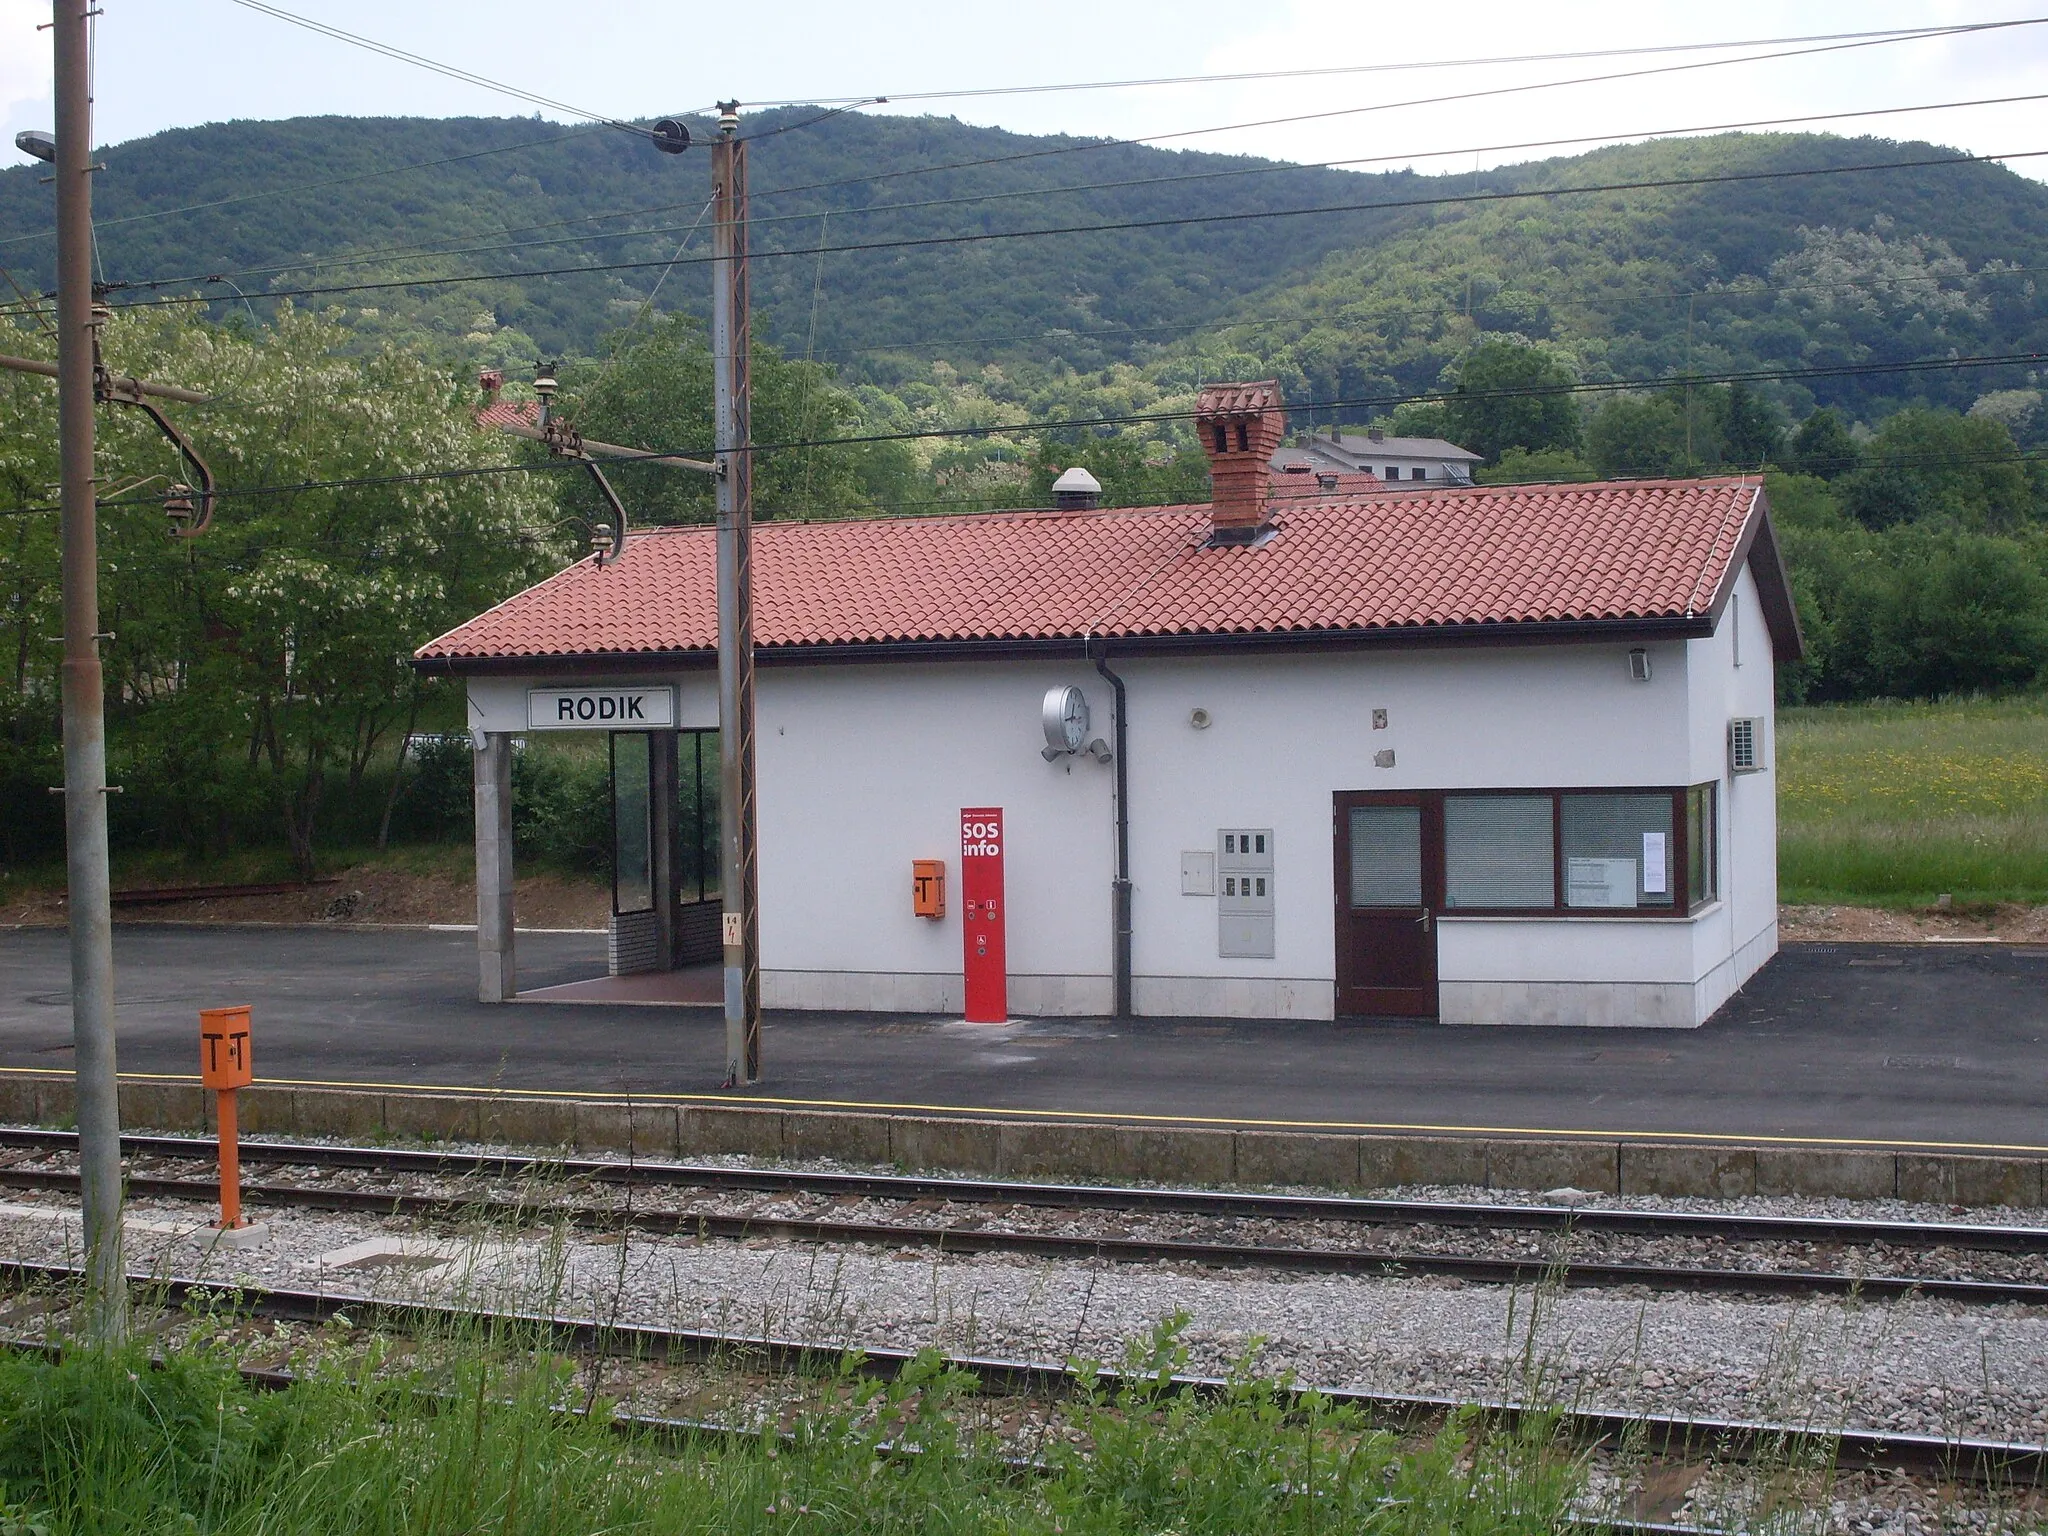 Photo showing: Train station in Rodik, Slovenia